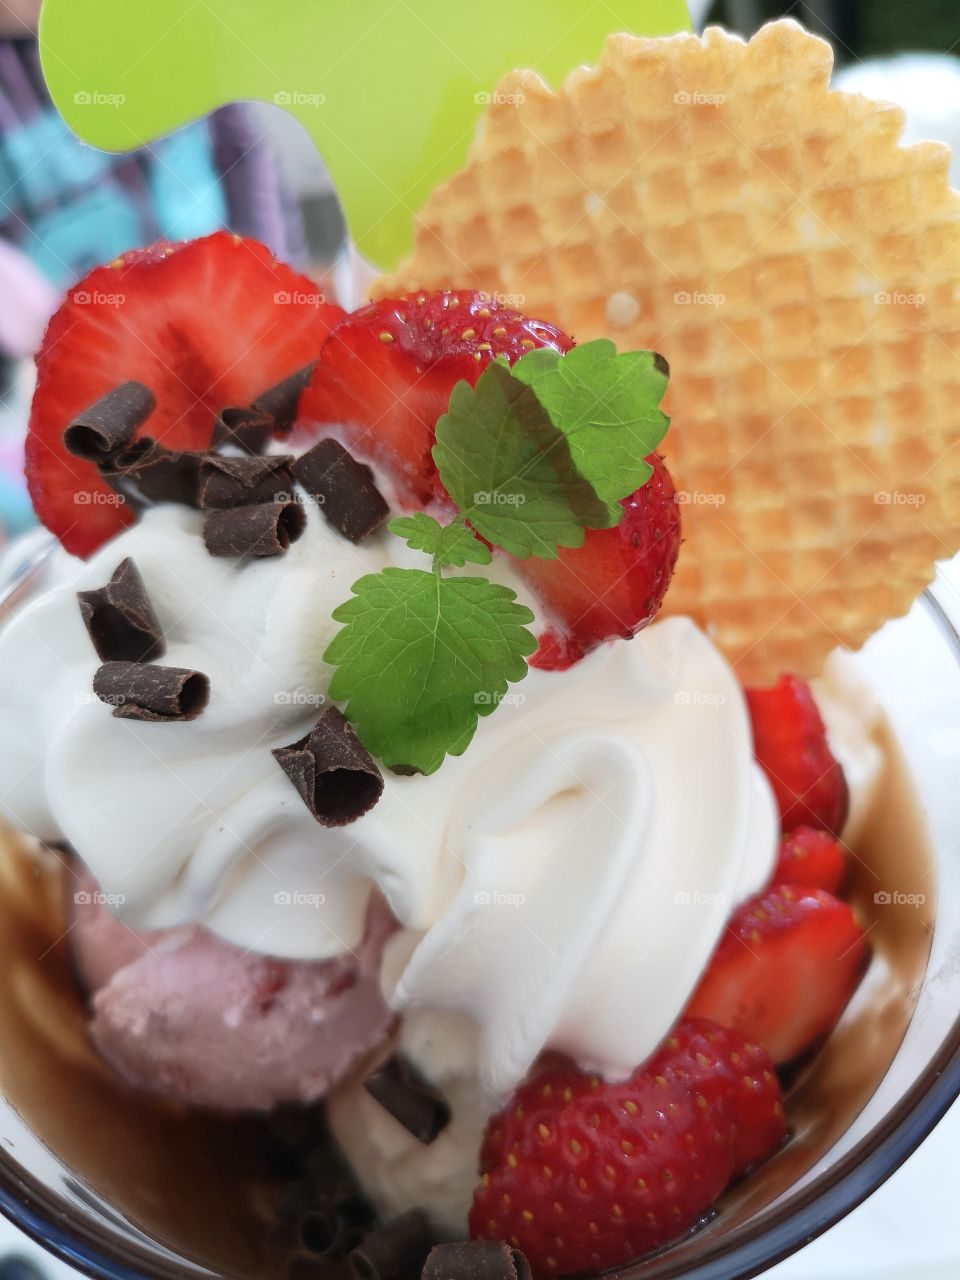 Delicious ice cream with strawberries